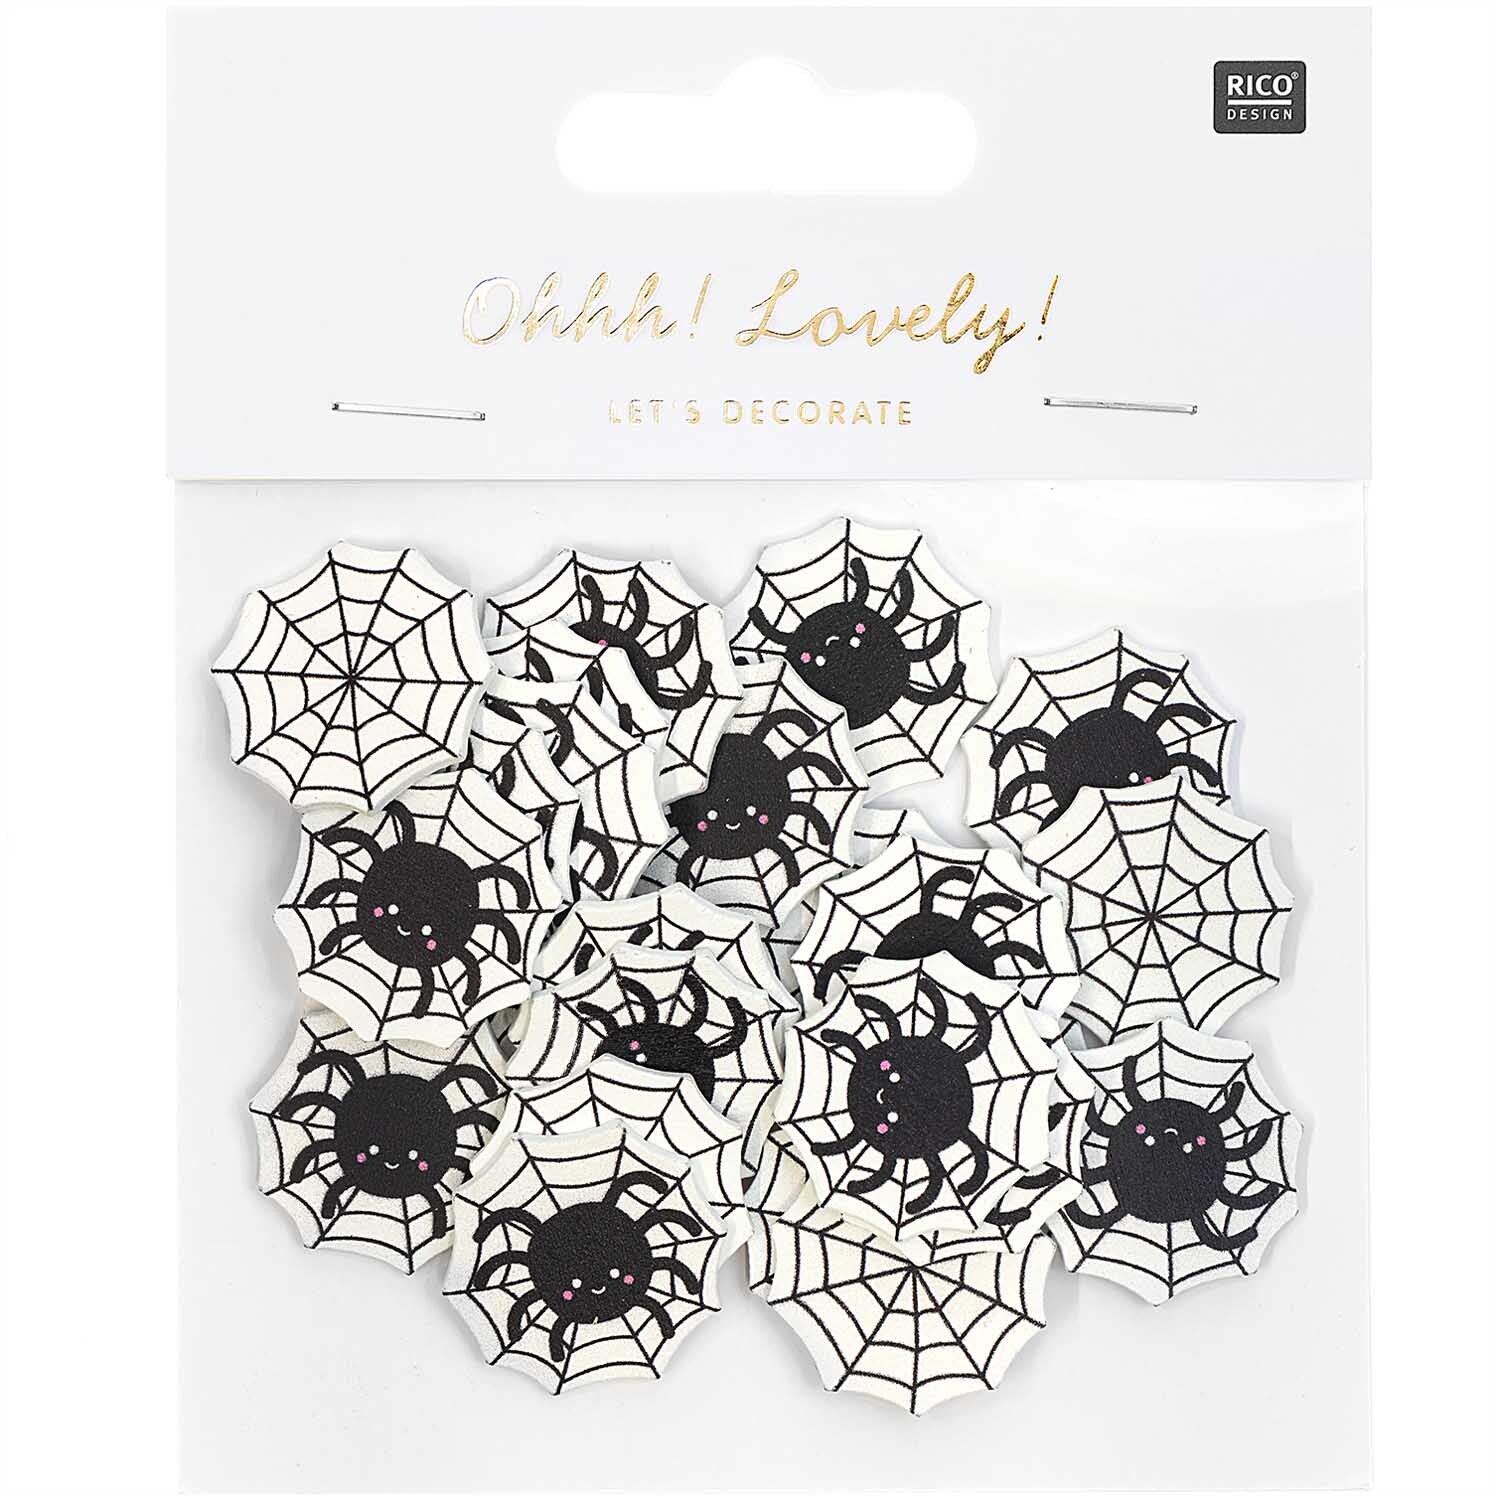 Holzstreu Spinnennetz schwarz-weiß 48 Stück